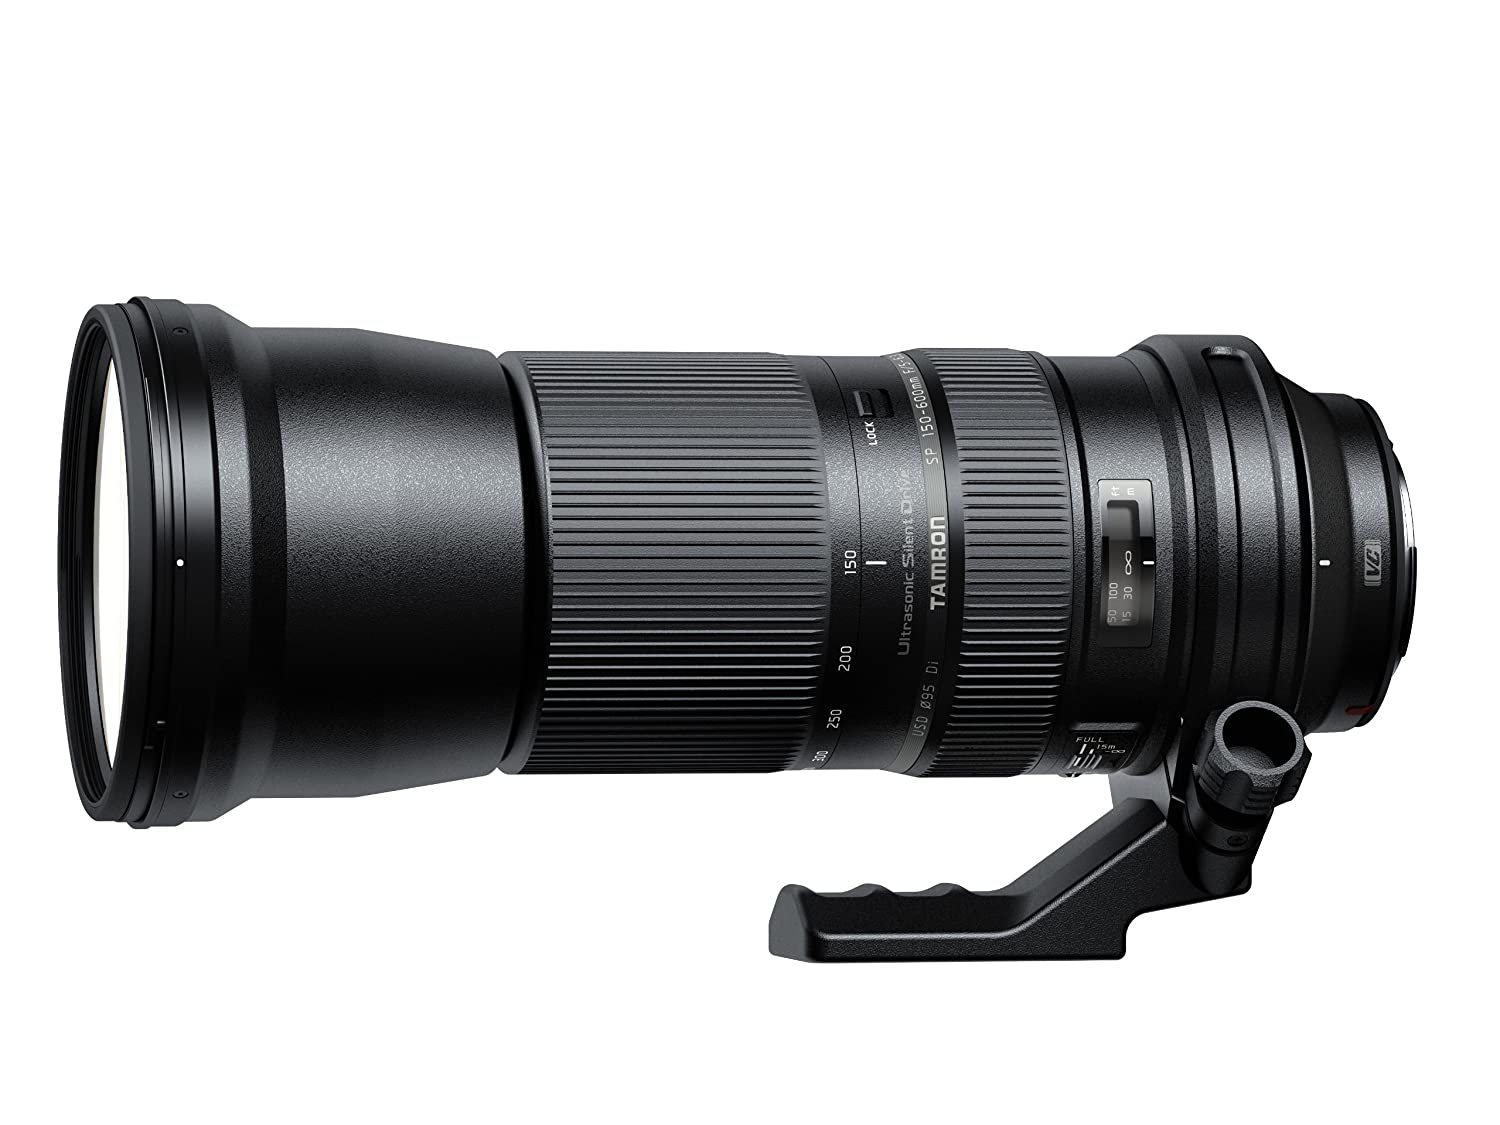 Detec™ Tamron A011N SP 150-600mm F/5-6.3 Di VC USD Telephoto Zoom Lens for Nikon DSLR Camera